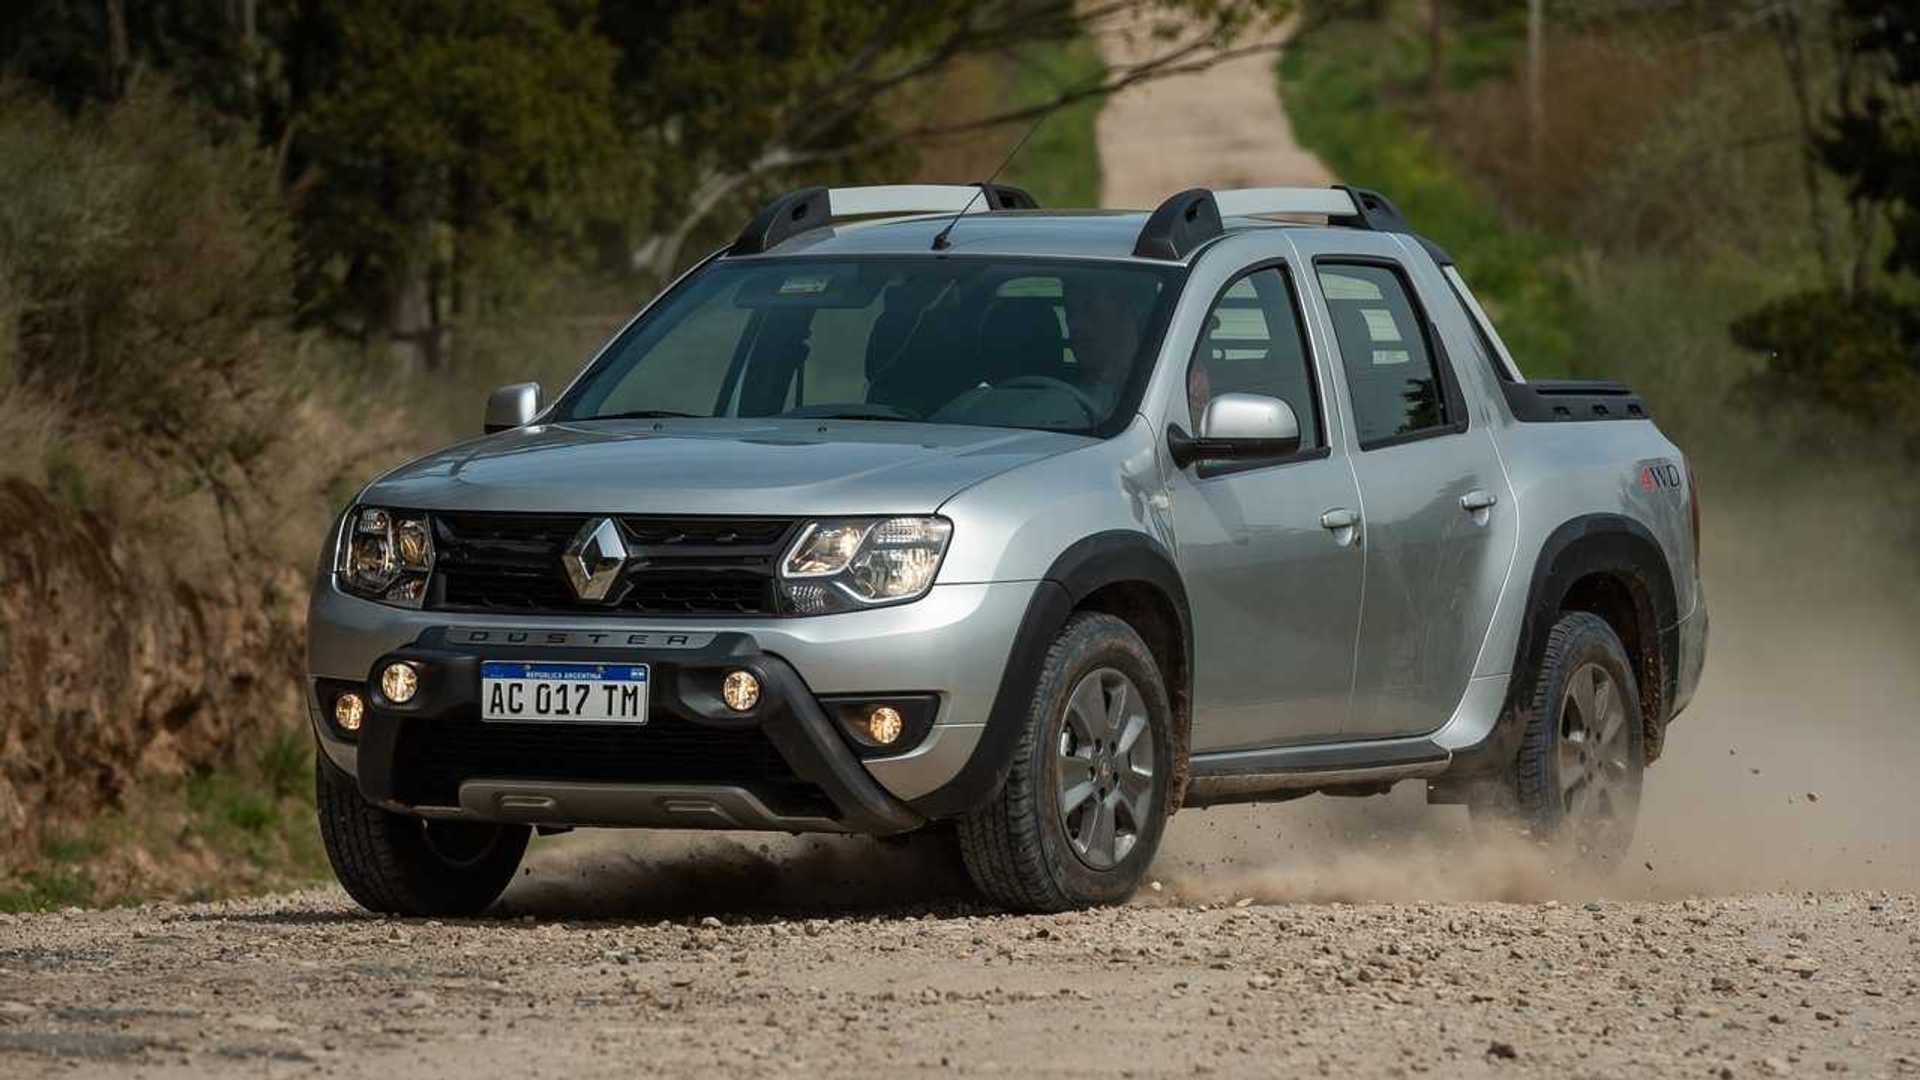 Renault duster oroch (2016) › характеристики, описание, видео и фото рено дастер ороч › autozov.ru